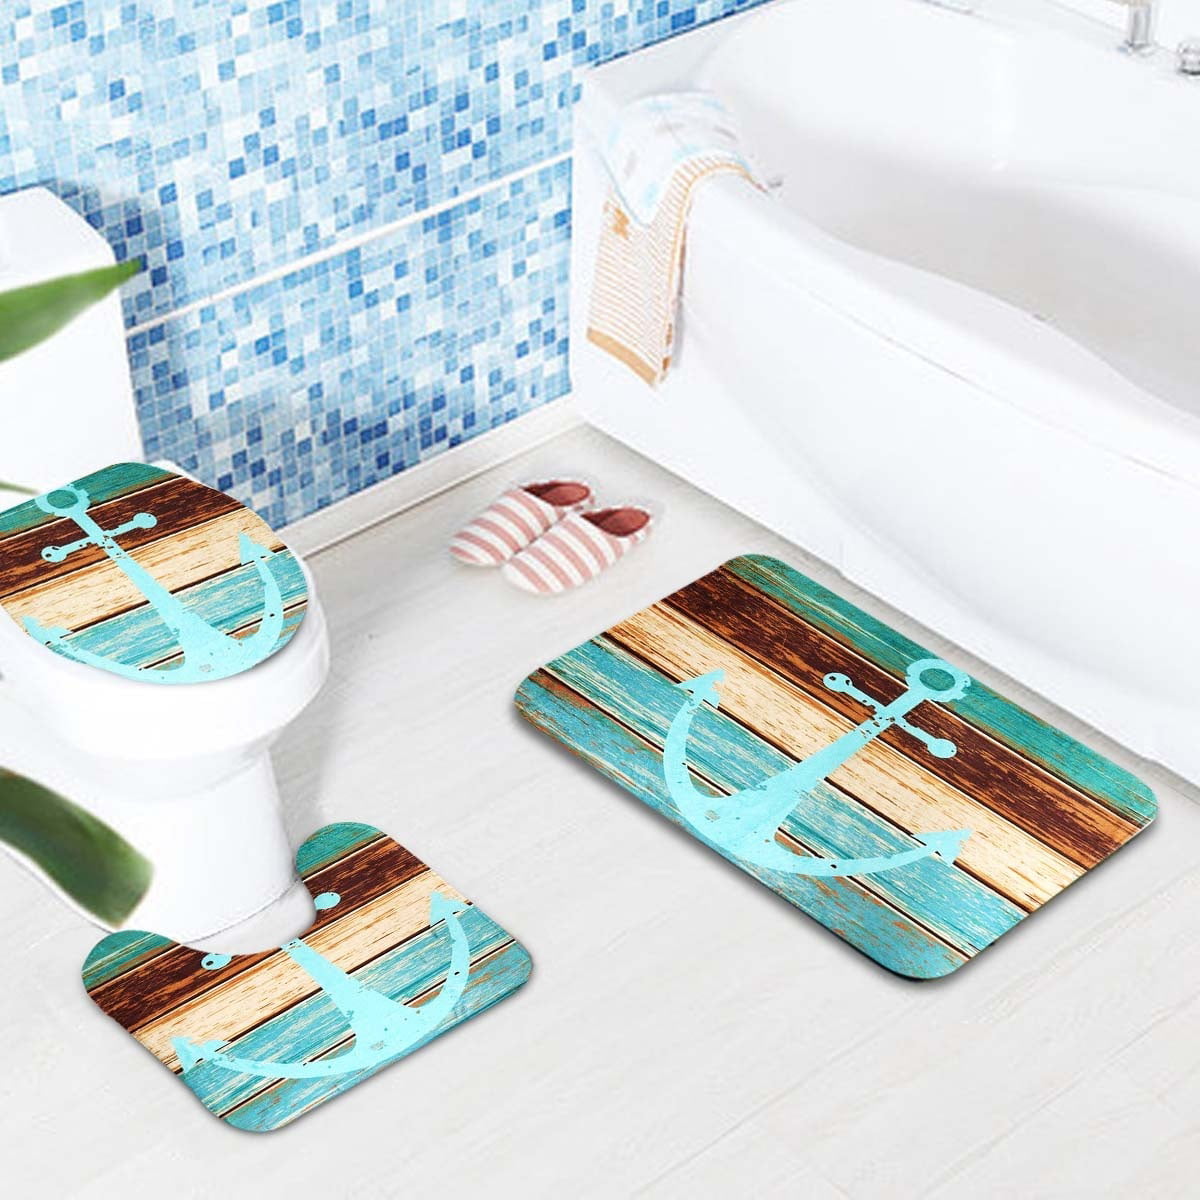 3Pcs Nautical Anchor Bathroom Non-Slip Pedestal Rug+Lid Toilet Cover+Bath Mats 